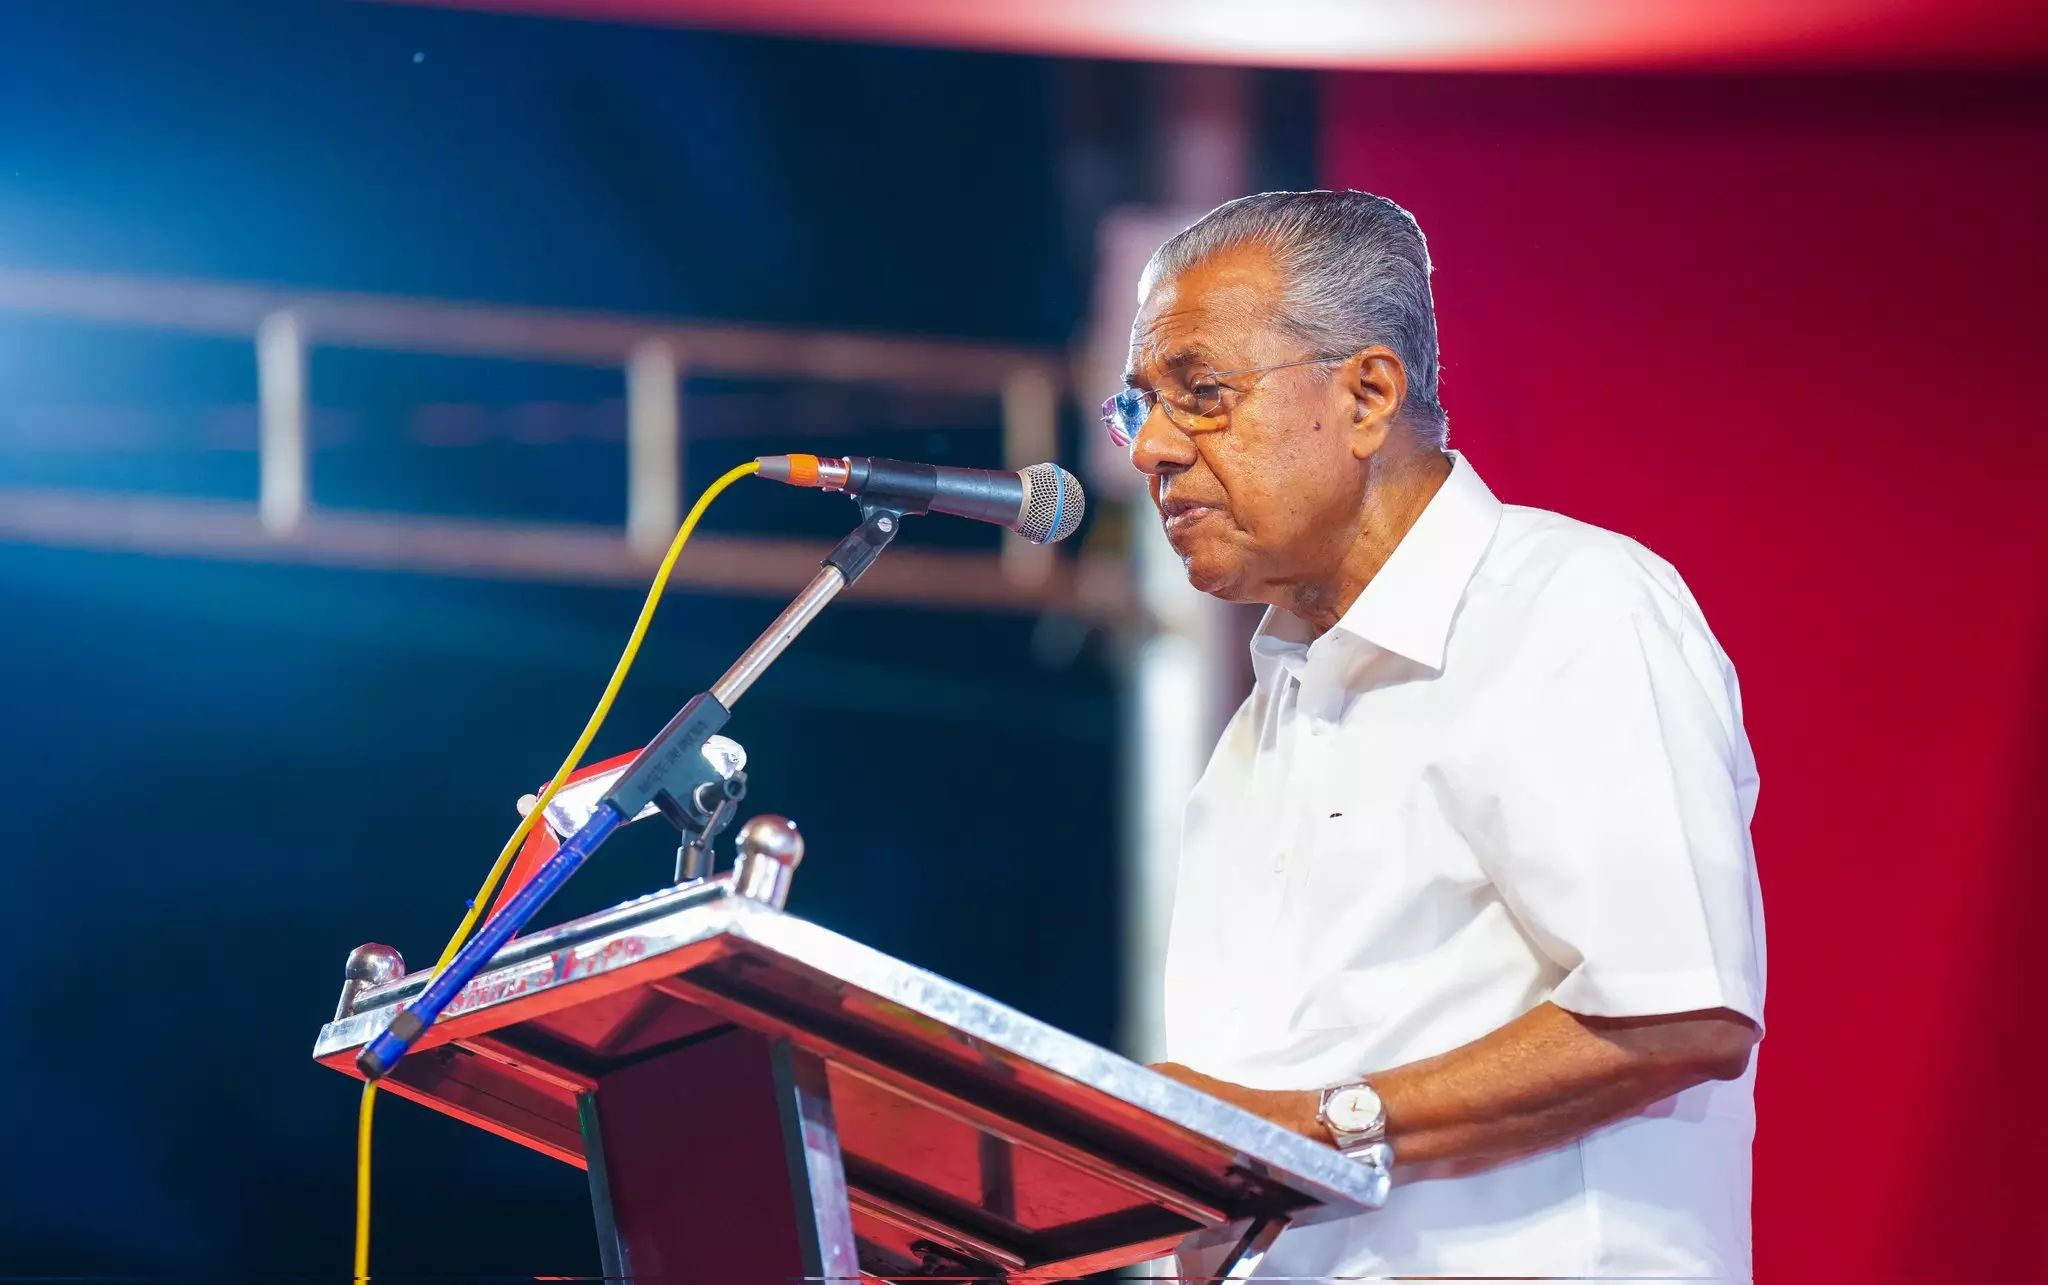 The Kerala Story RSS Trap To Defame Kerala Says CM Pinarayi Vijayan